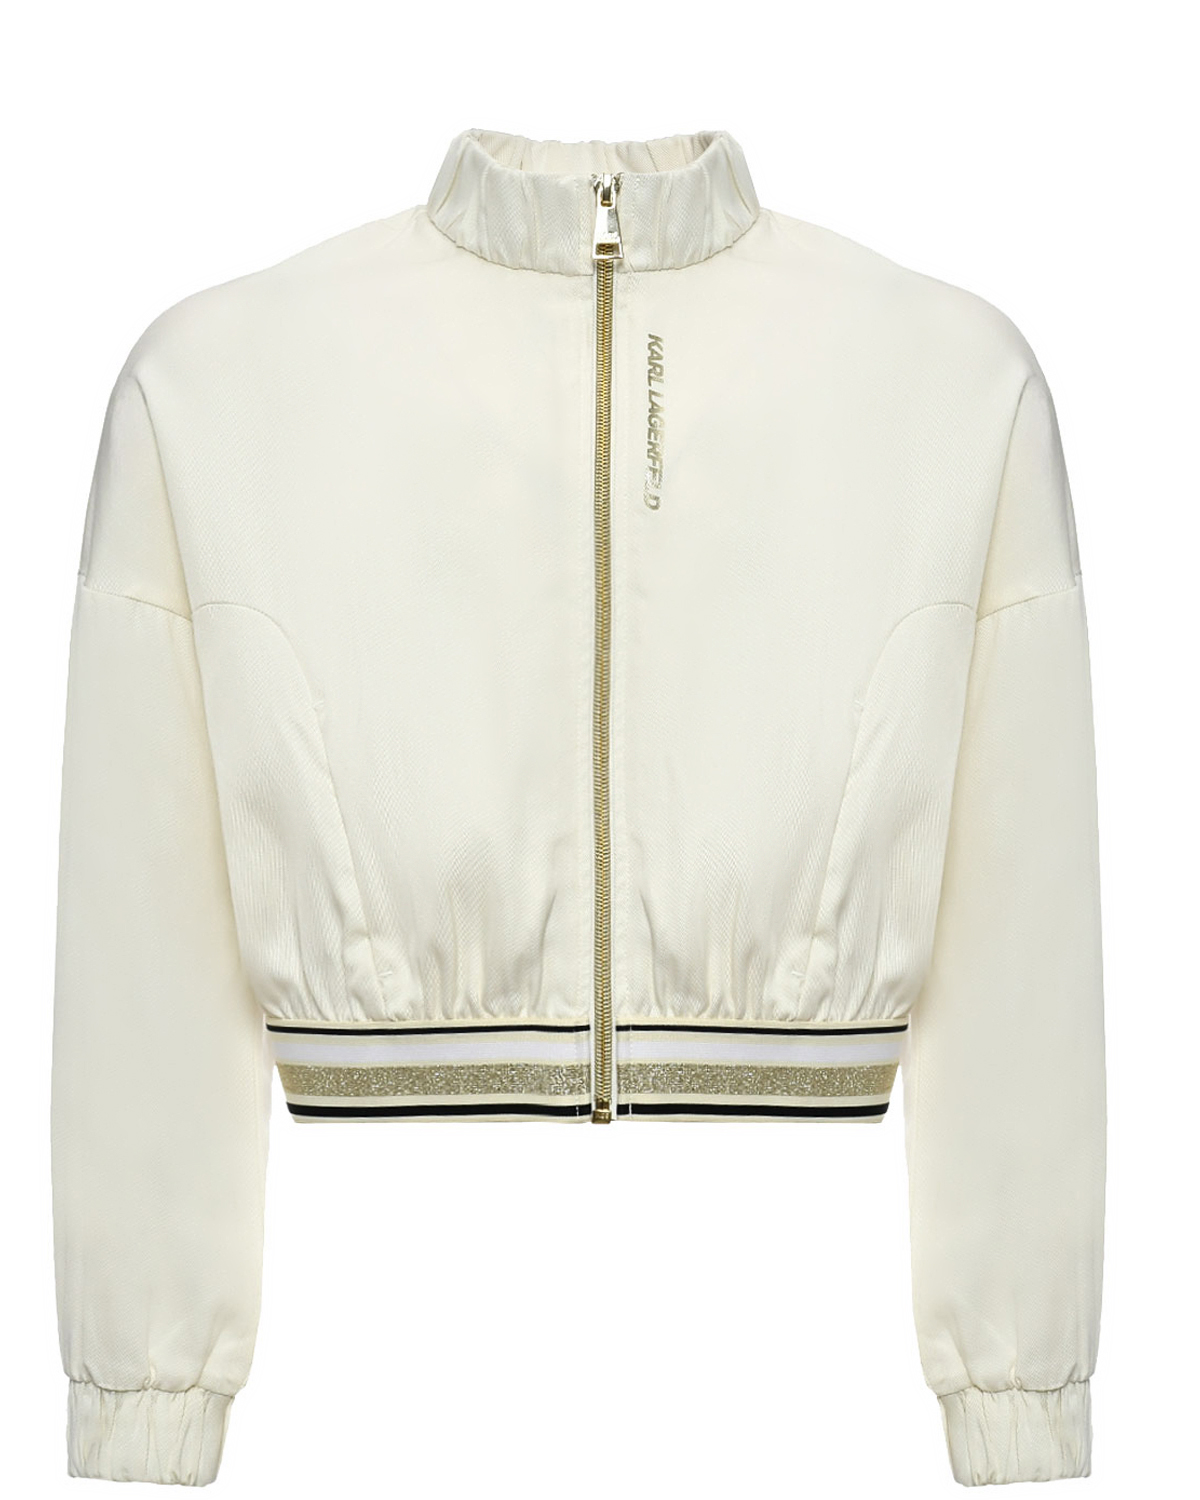 Спортивная куртка с лого из стразов, белая Karl Lagerfeld kids, размер 140, цвет нет цвета